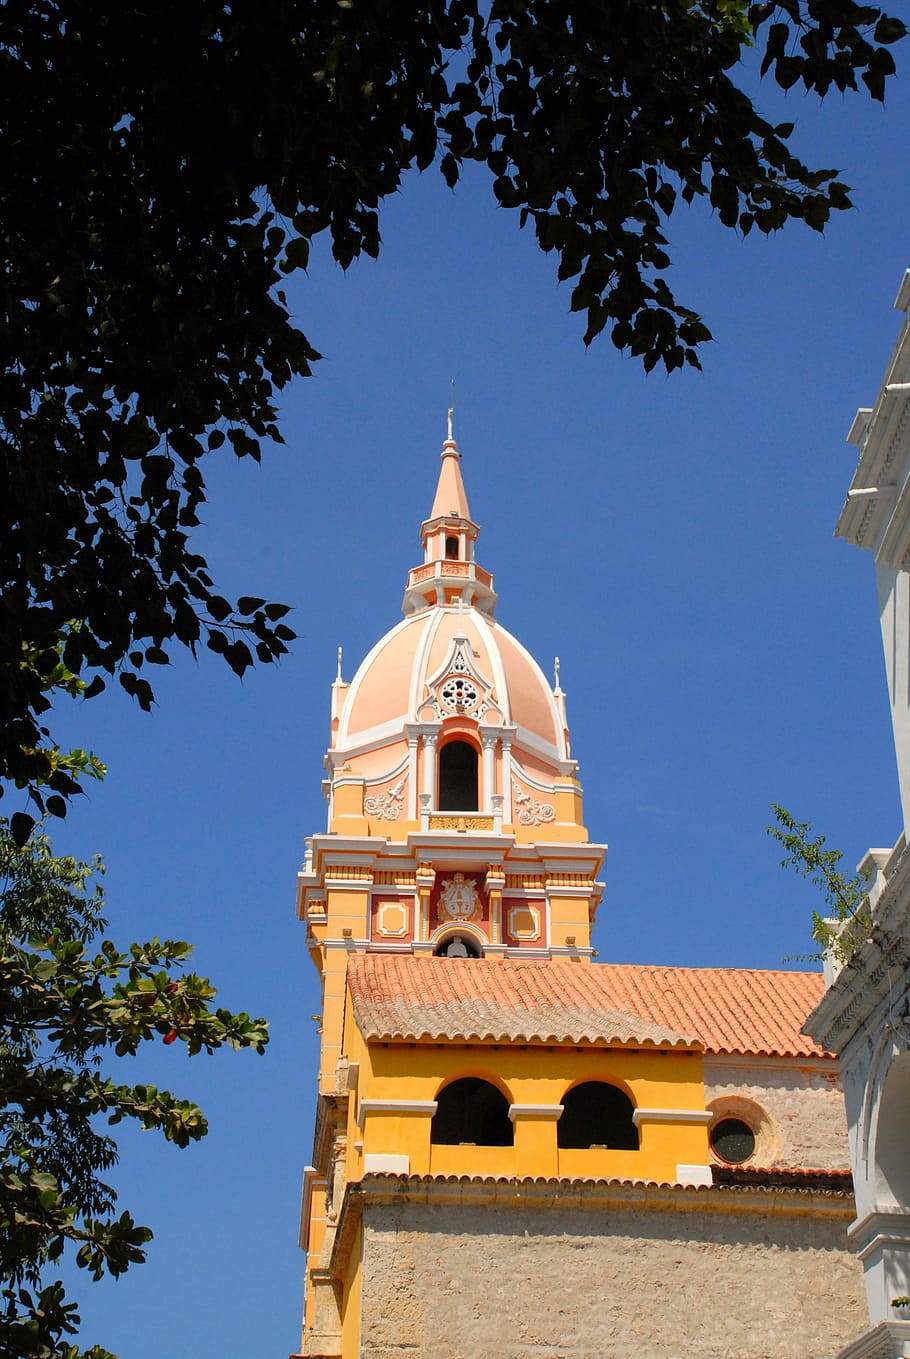 Dome, Cartagena, Colombia, Church, cartagena, colombia, facade, religion, architecture, tree, history